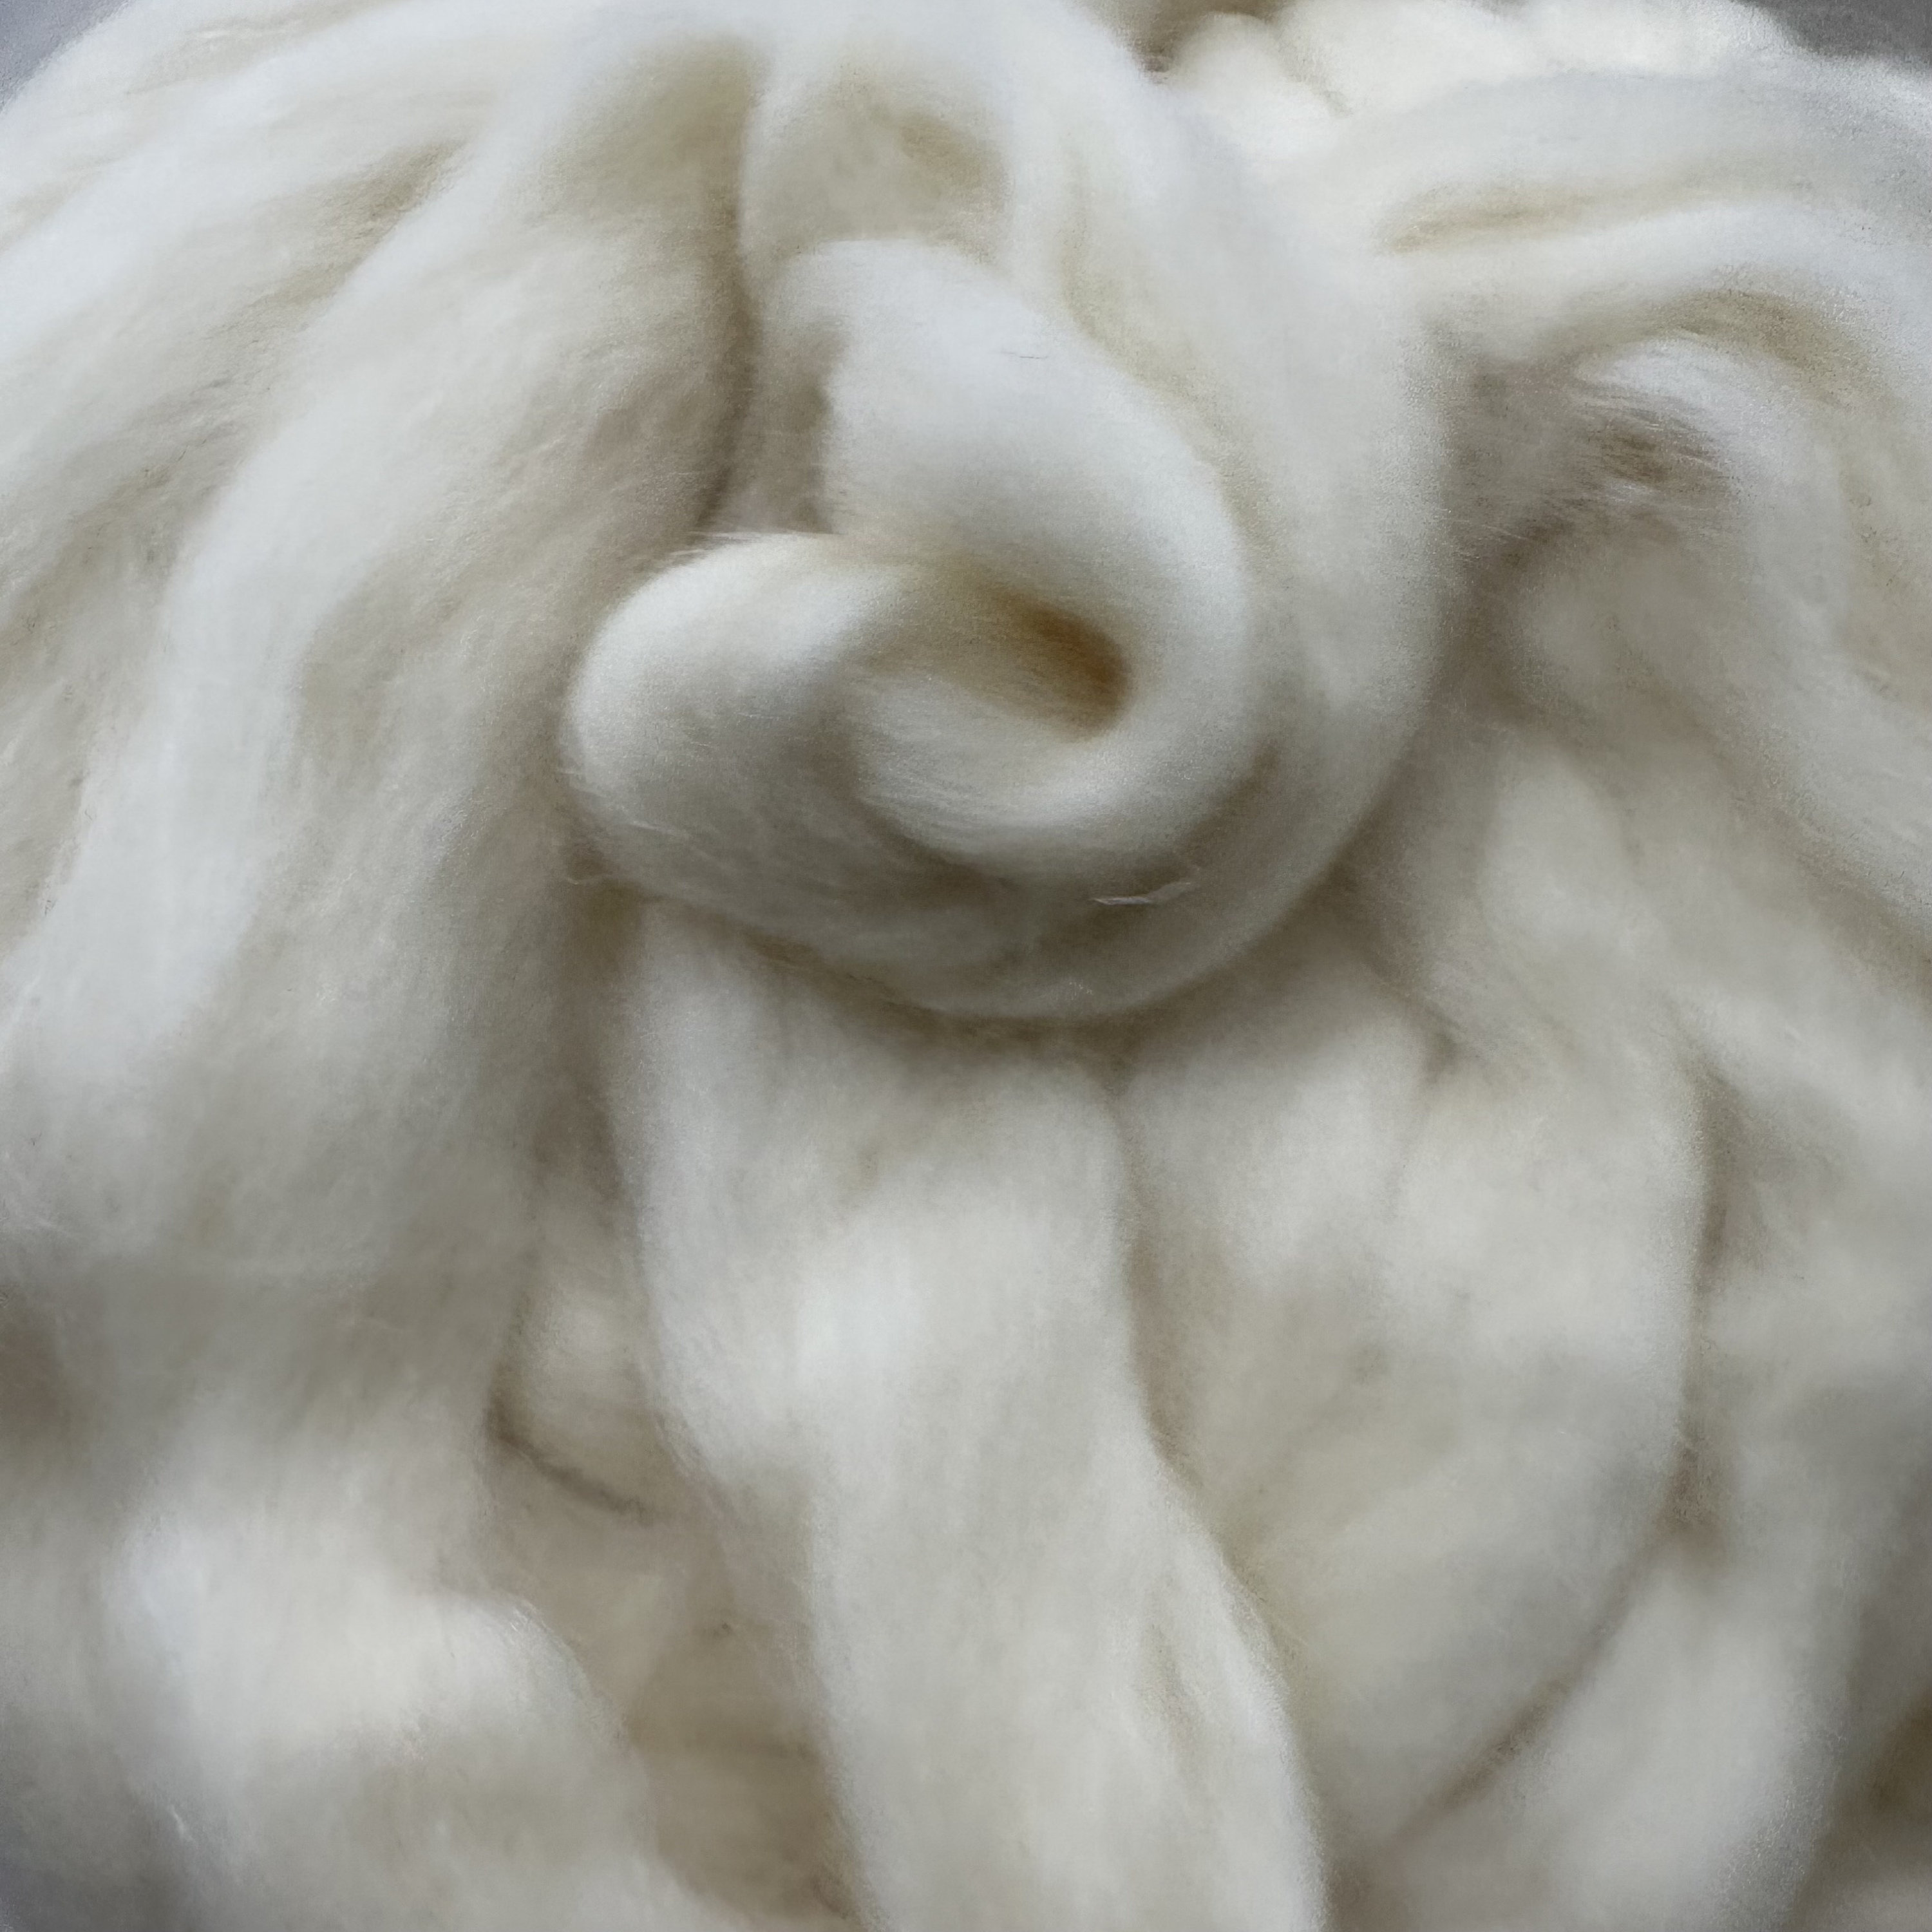 1 LB Core Wool Needle Felting Spinning Wet Felting Stuffing by